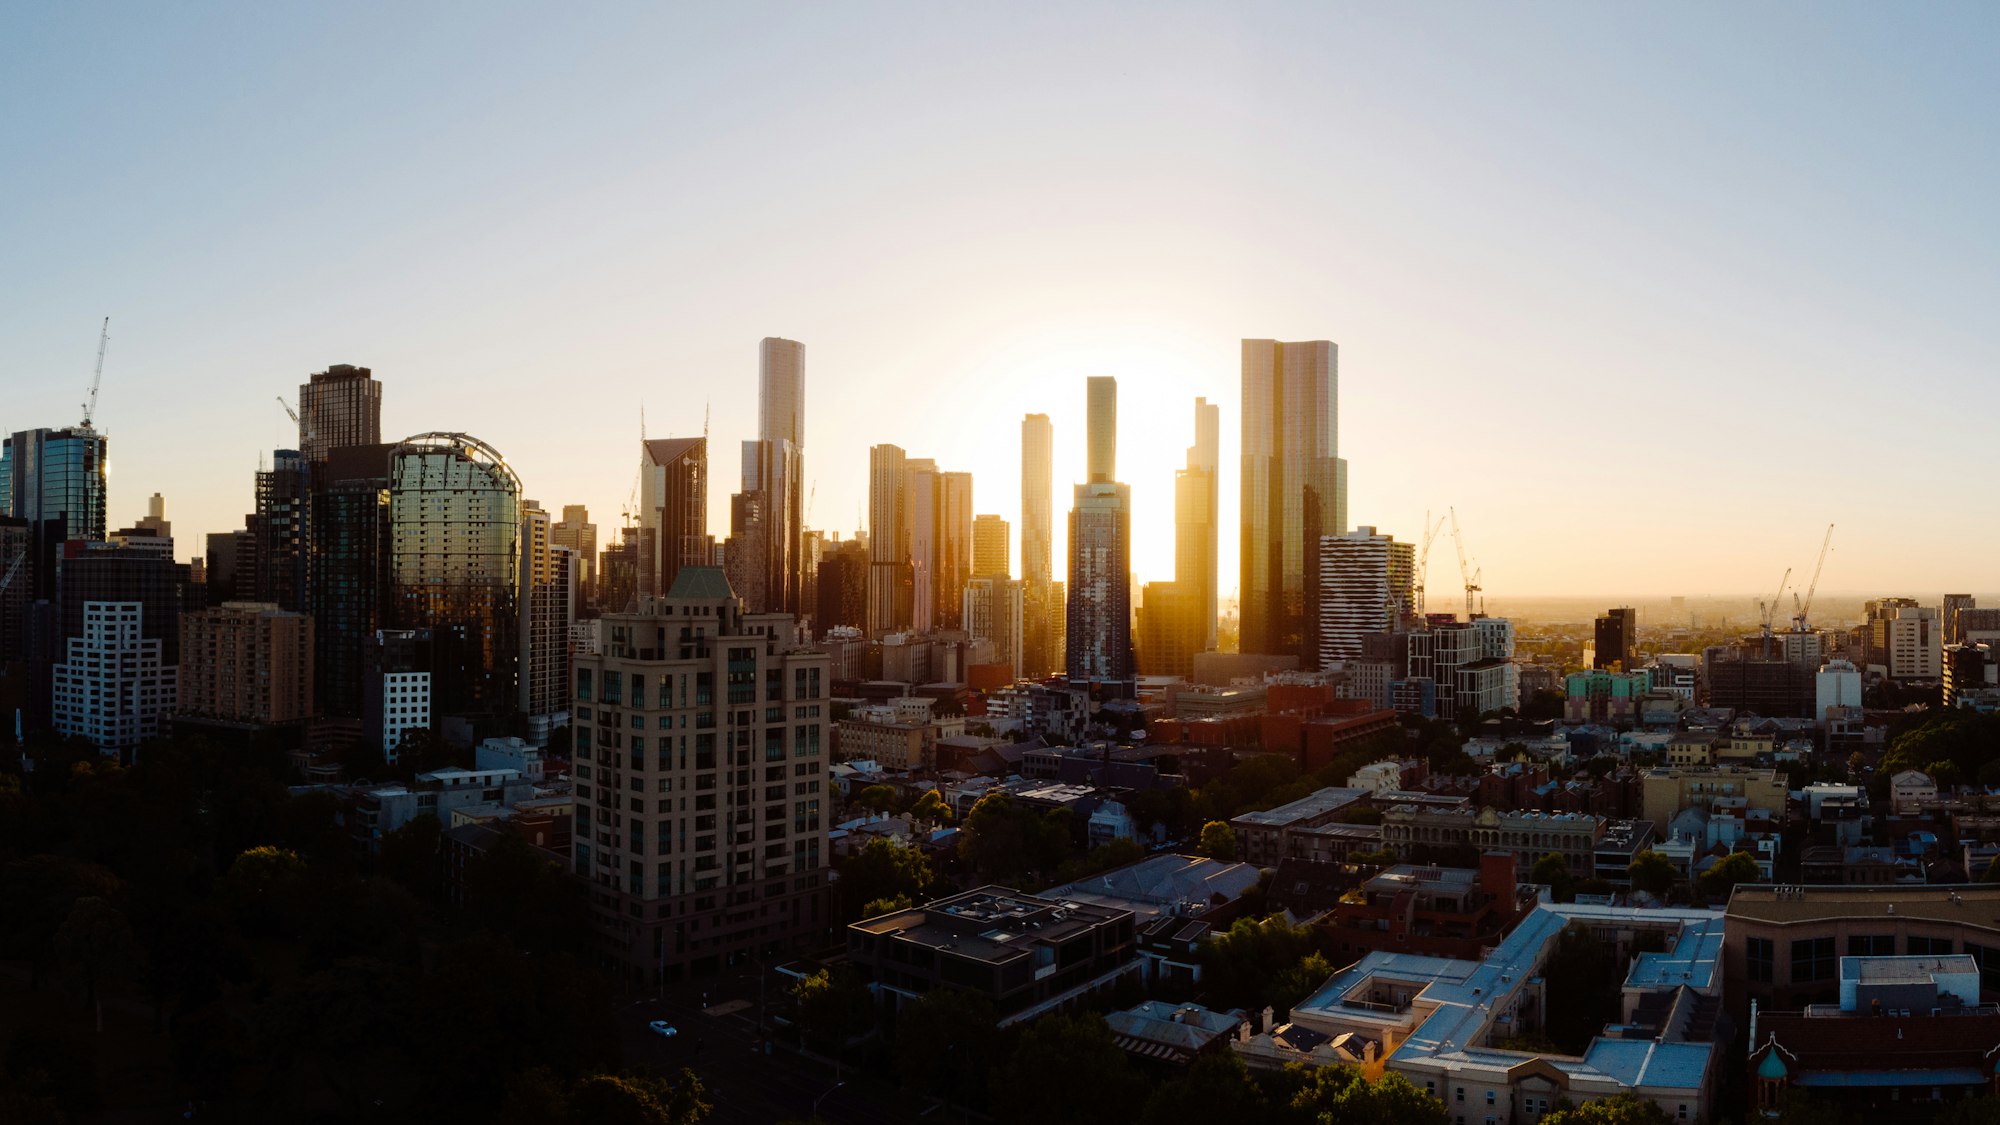 Sunset over Melbourne, Australia